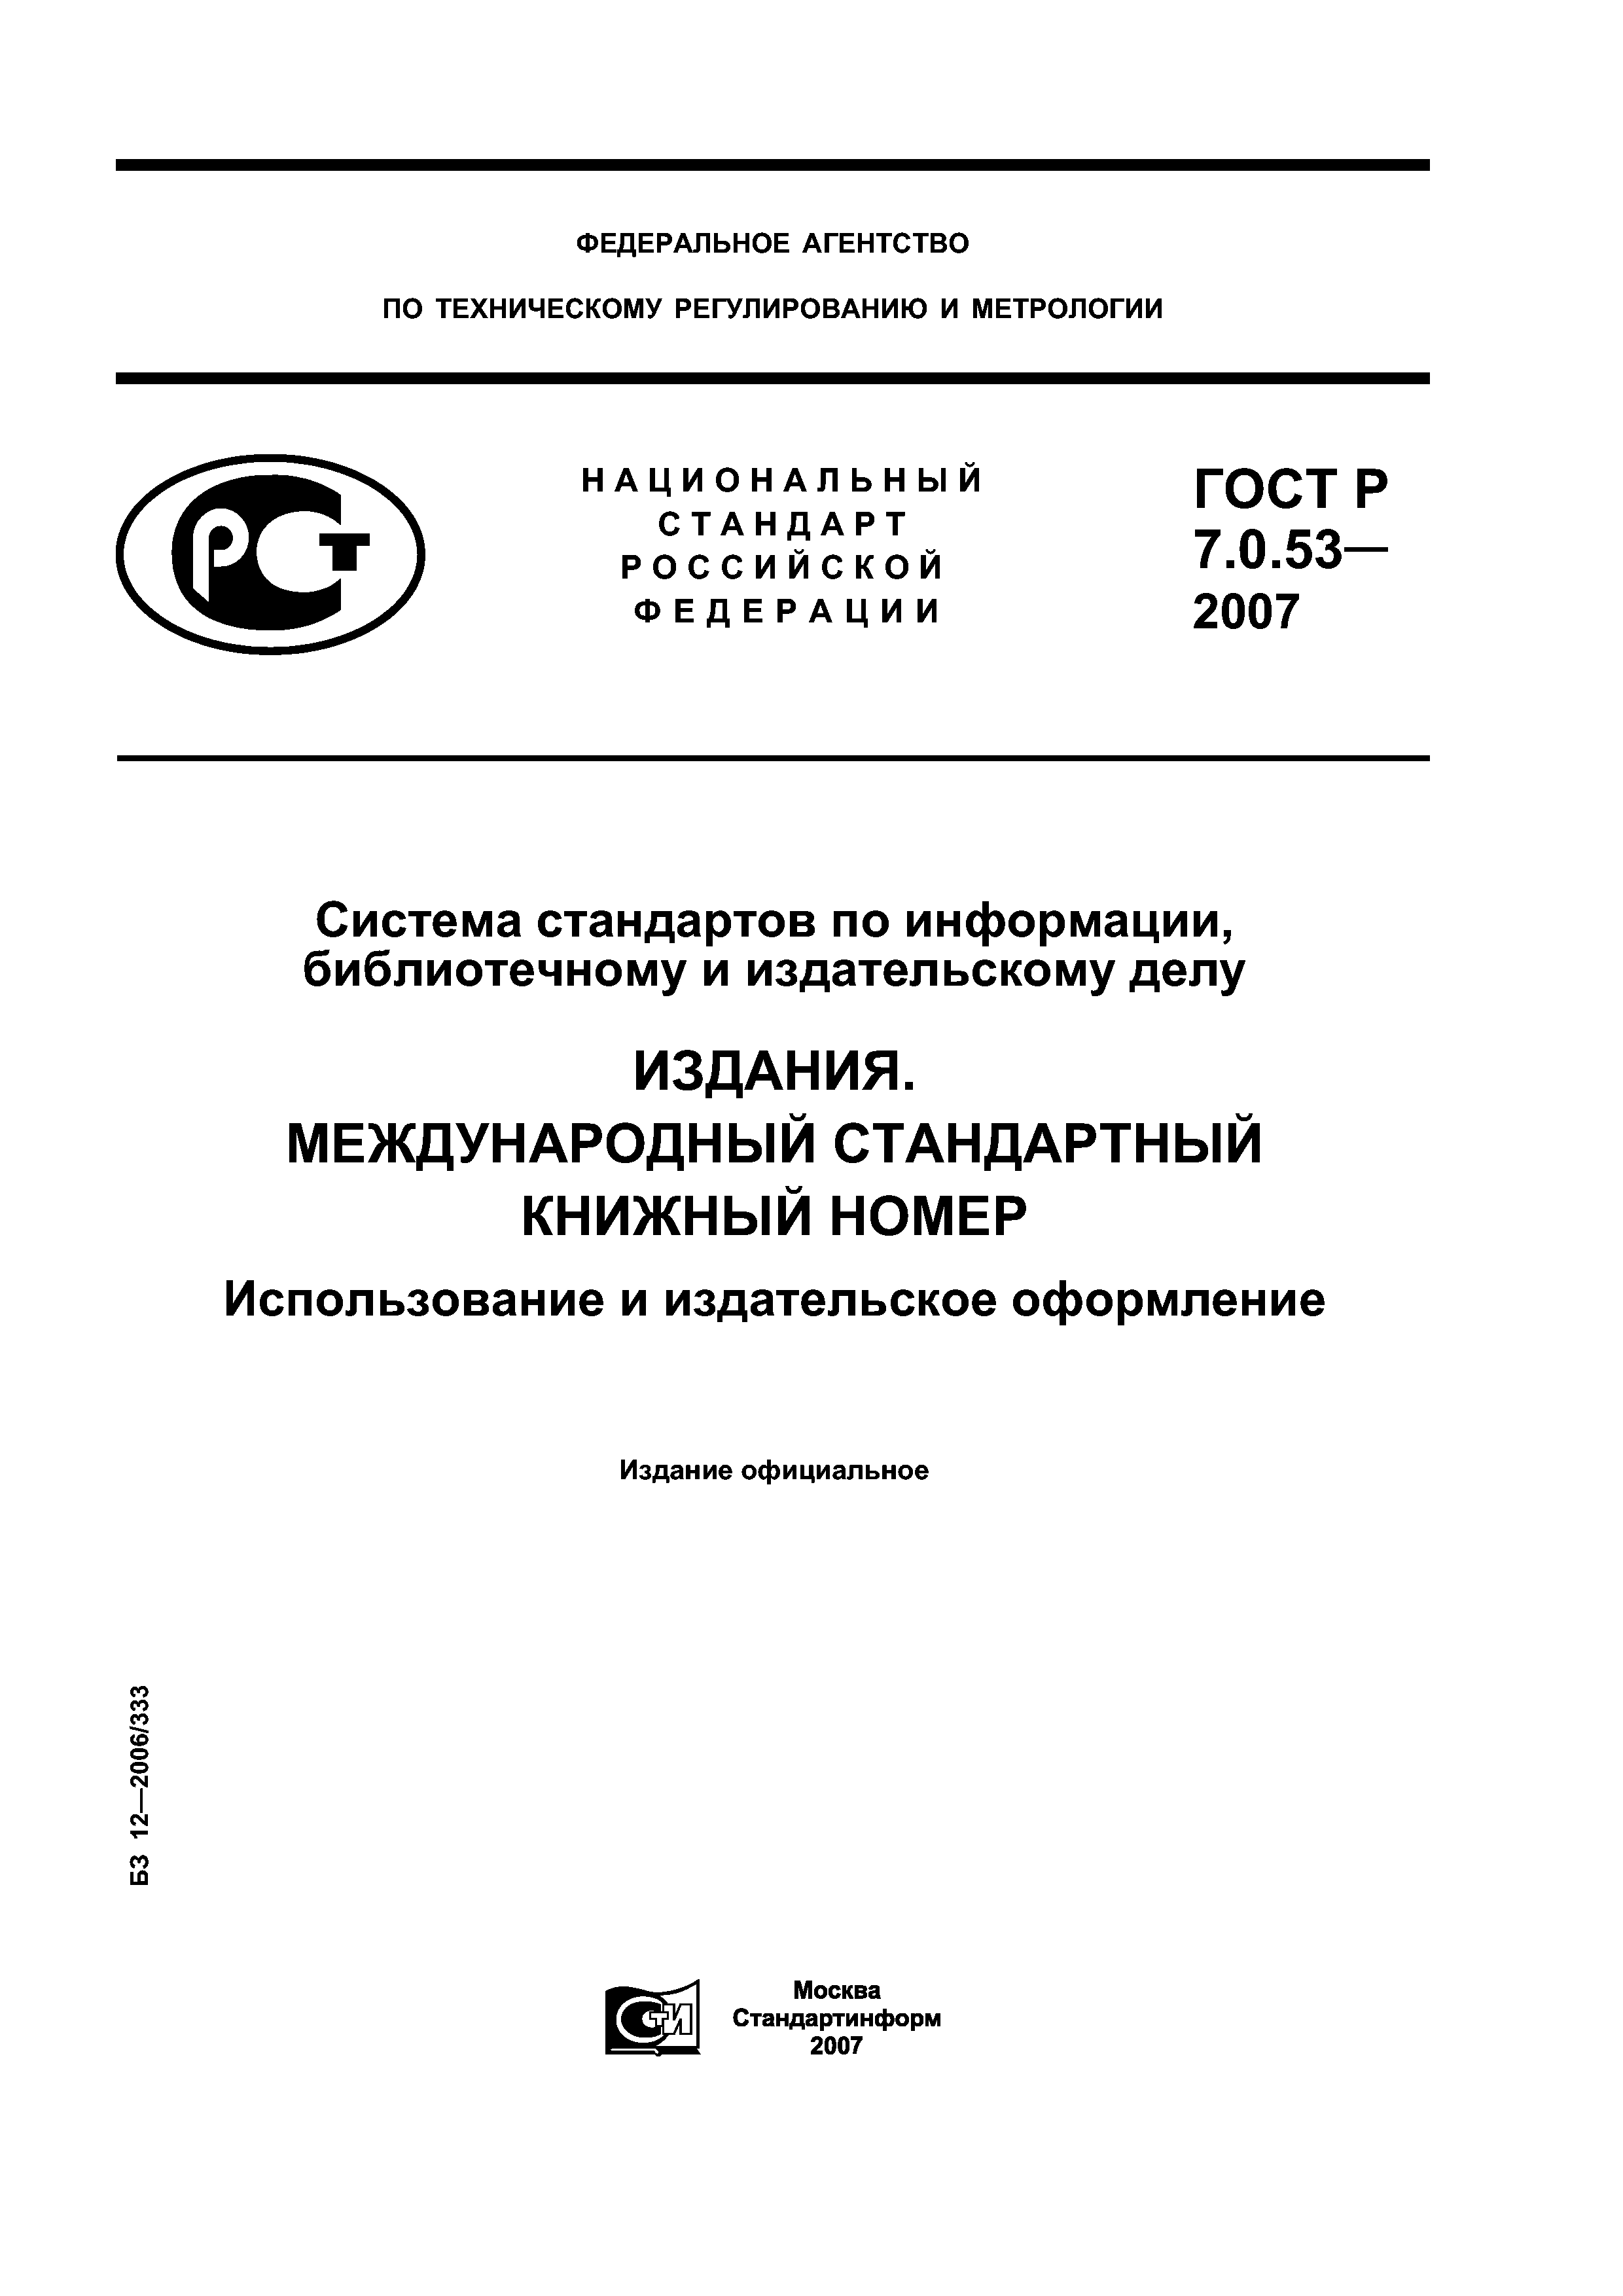 ГОСТ Р 7.0.53-2007